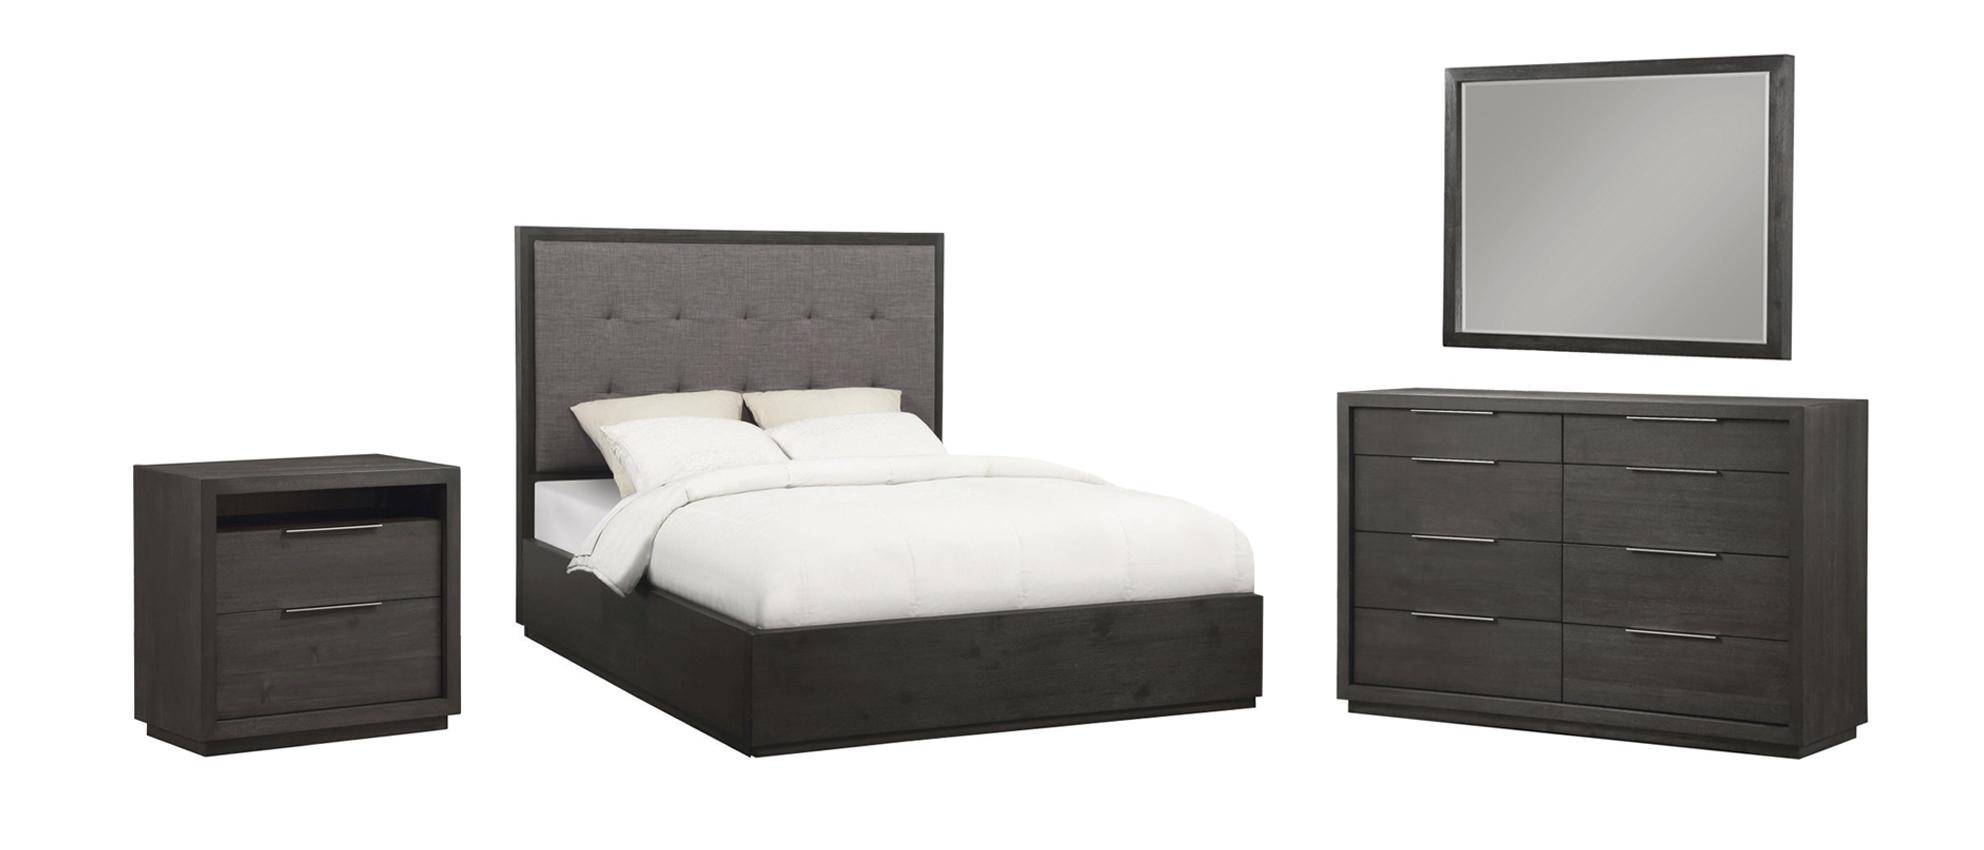 Contemporary Platform Bedroom Set OXFORD AZU5F7D-NDM-4PC in Dark Gray Fabric